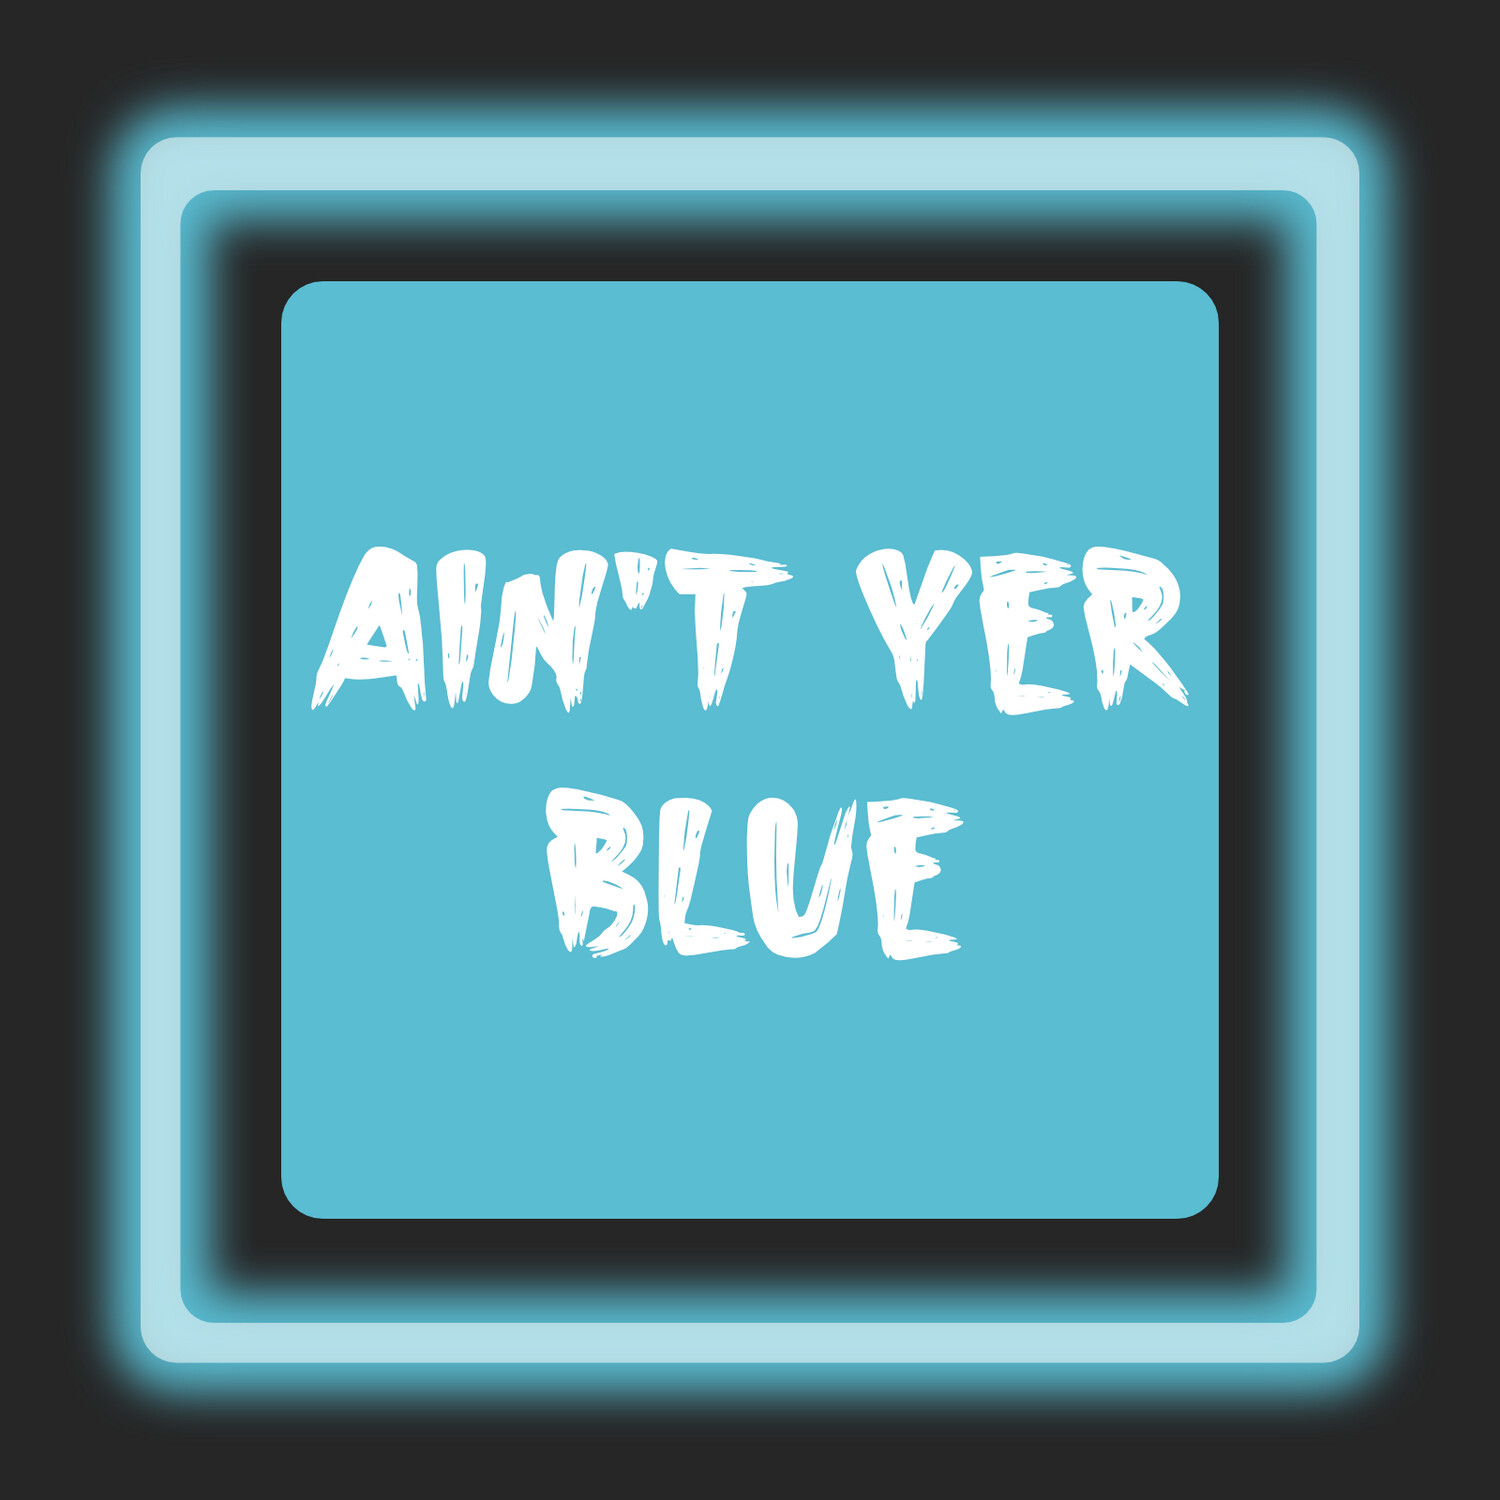 Ain't Yer Blue